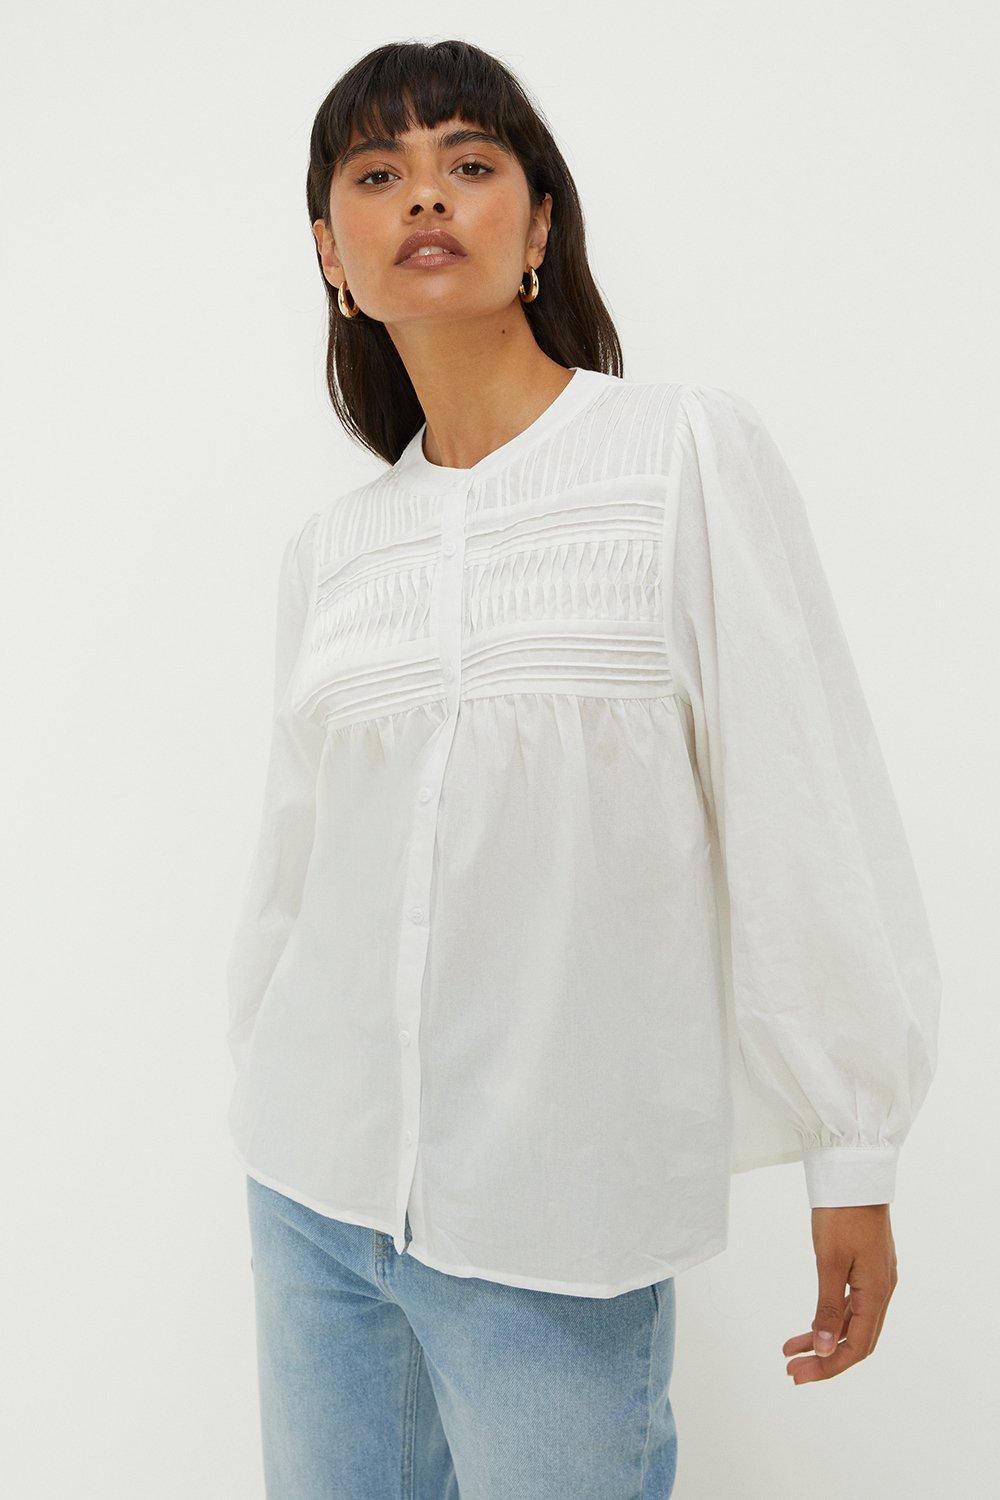 Women’s Pleat Front Button Up Blouse - white - M